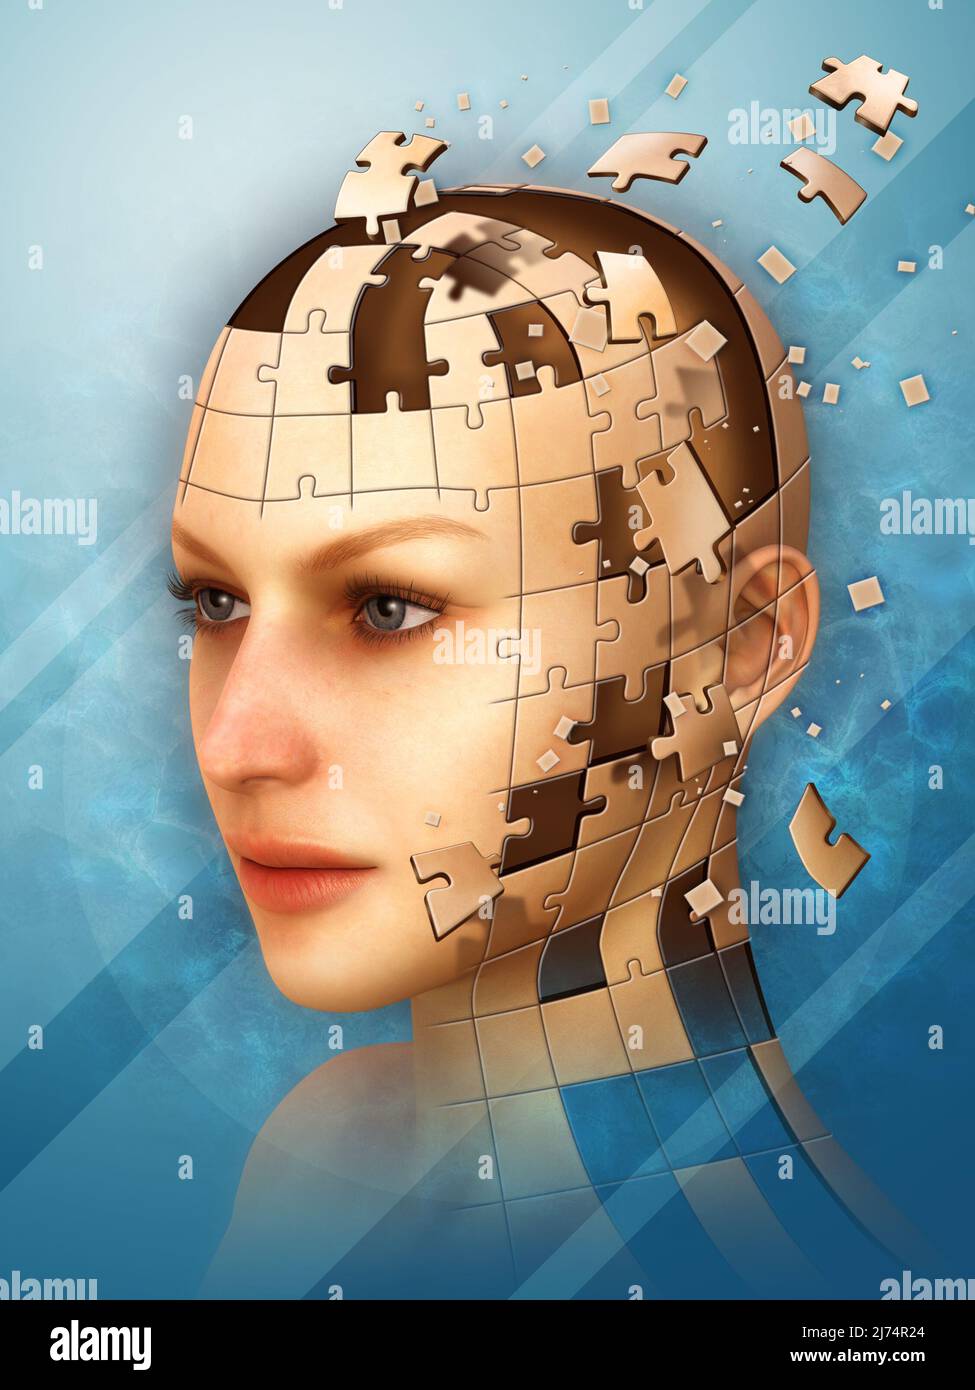 Three dimensional puzzle creating a female head. Digital illustration. Stock Photo